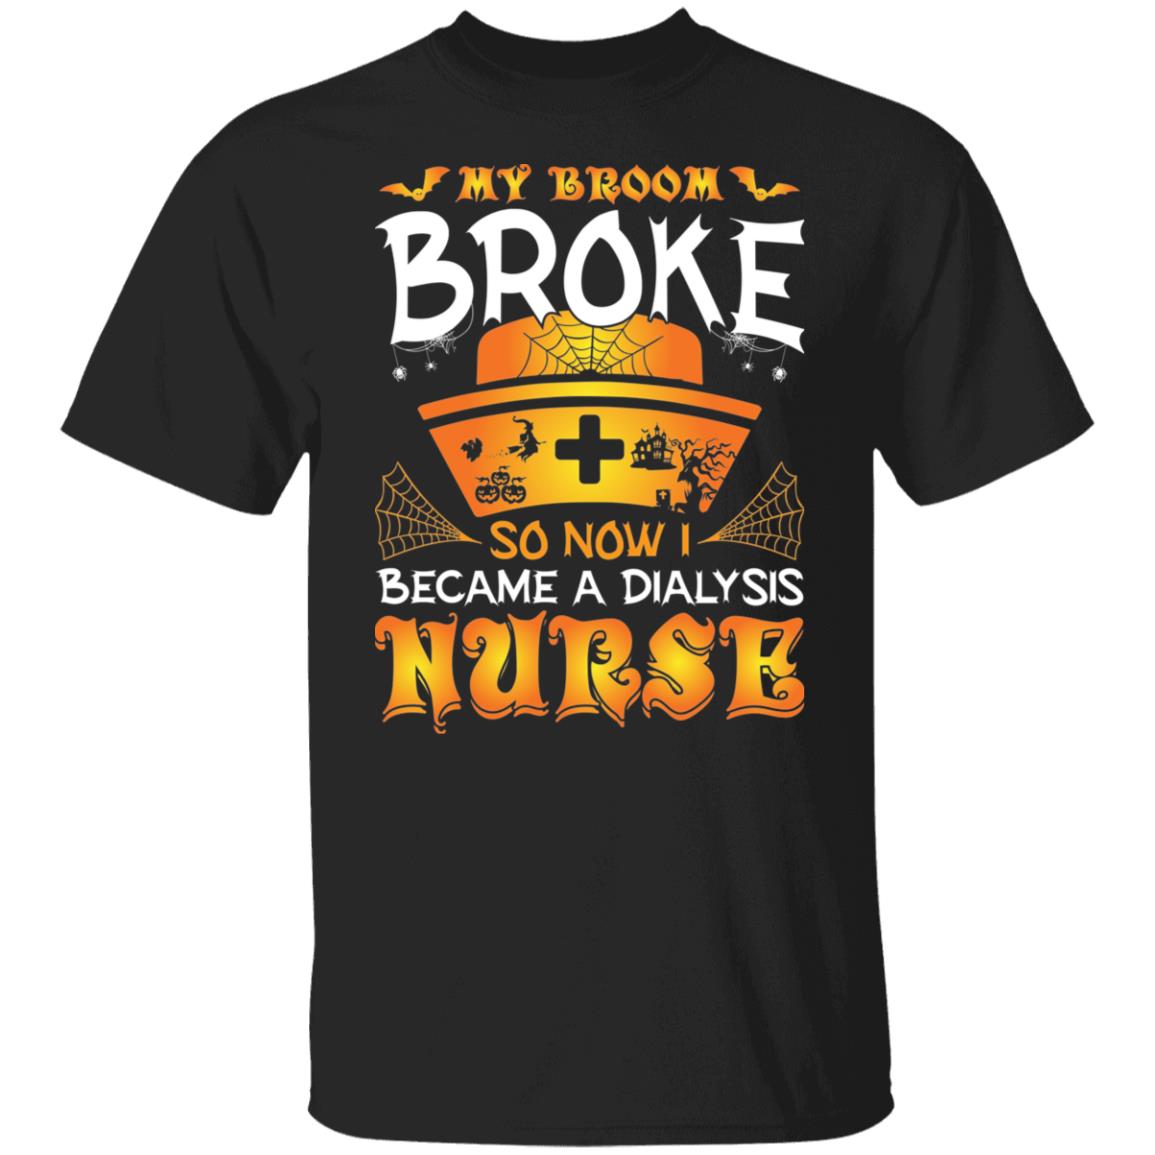 My Broom Broke so Now I Became a Dialysis Nurse